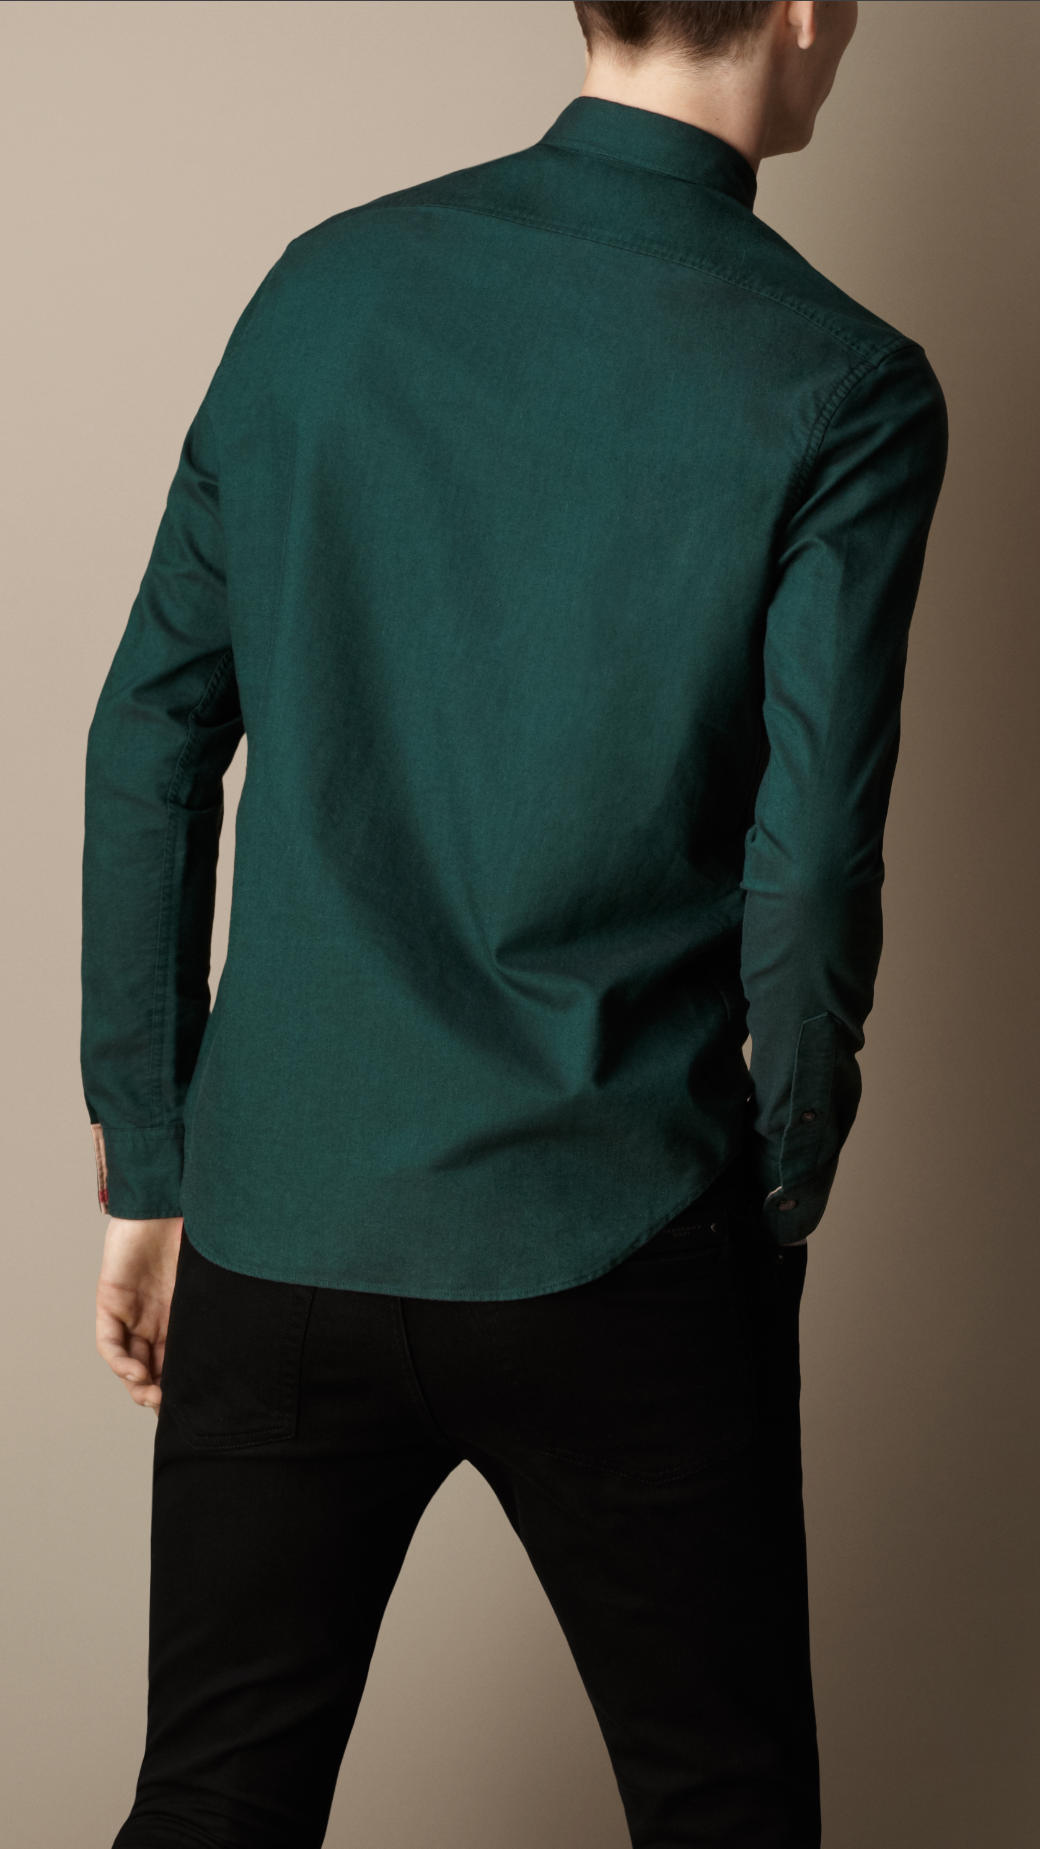 Lyst - Burberry Buttondown Cotton Shirt in Green for Men